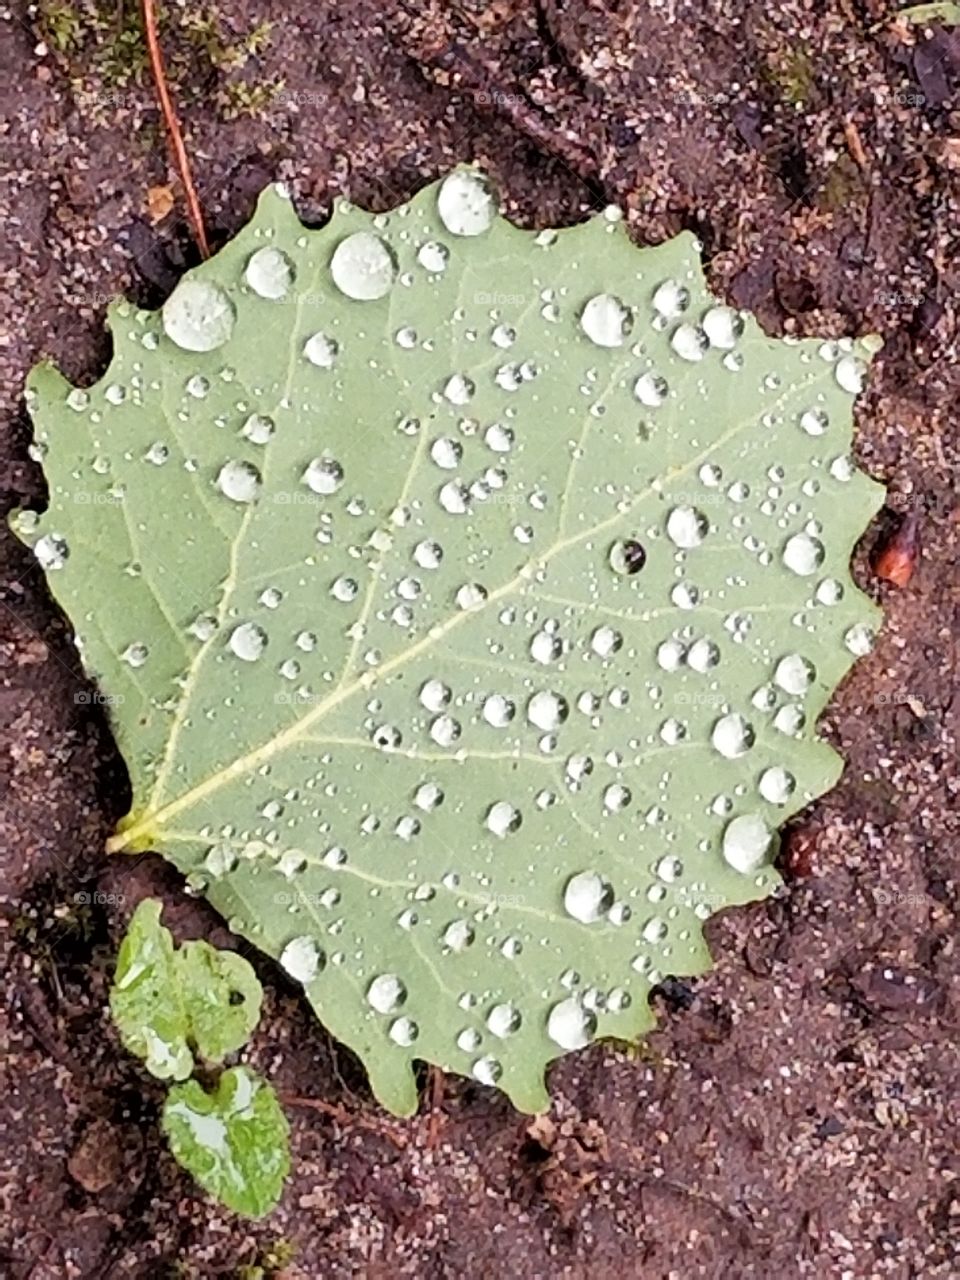 Leaf on a rainy day